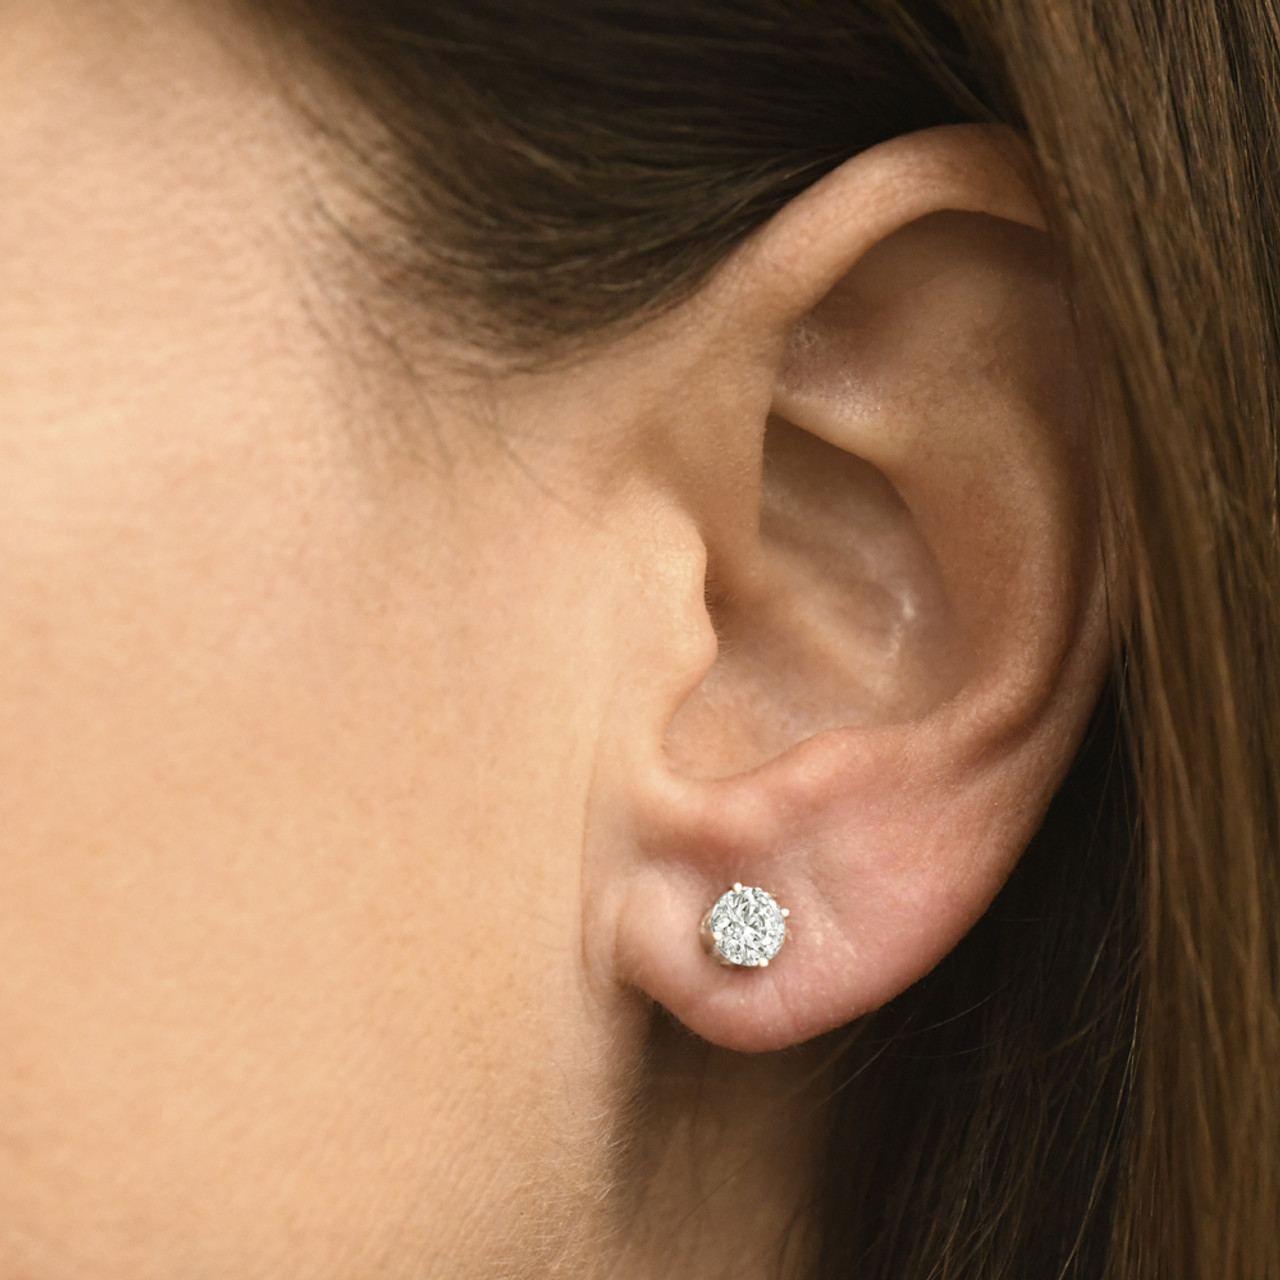 Round Diamond Stud Earrings 1 ct tw in 18K White Gold